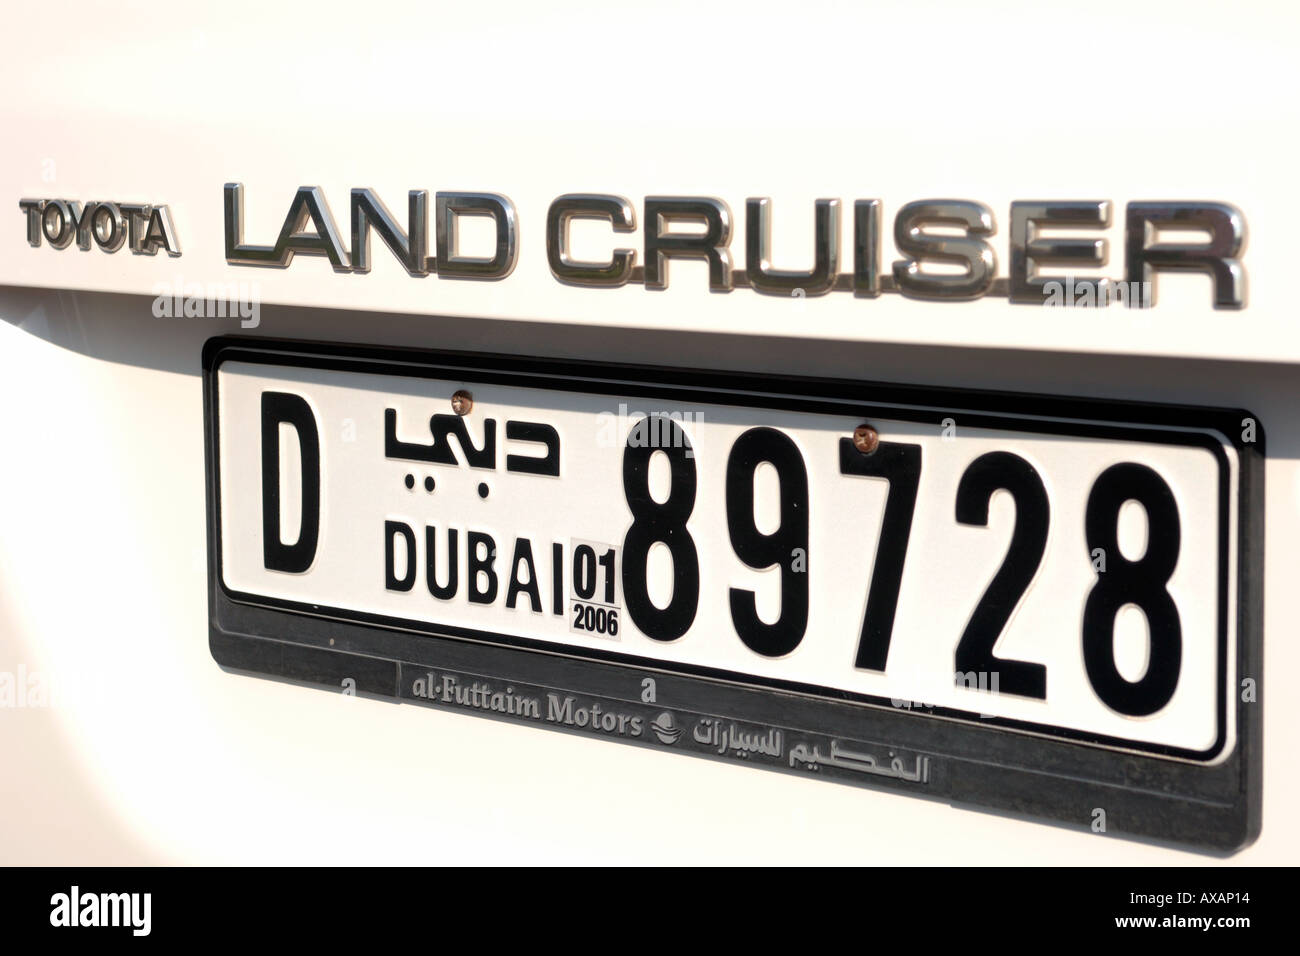 Car number plates in Dubai. Stock Photo